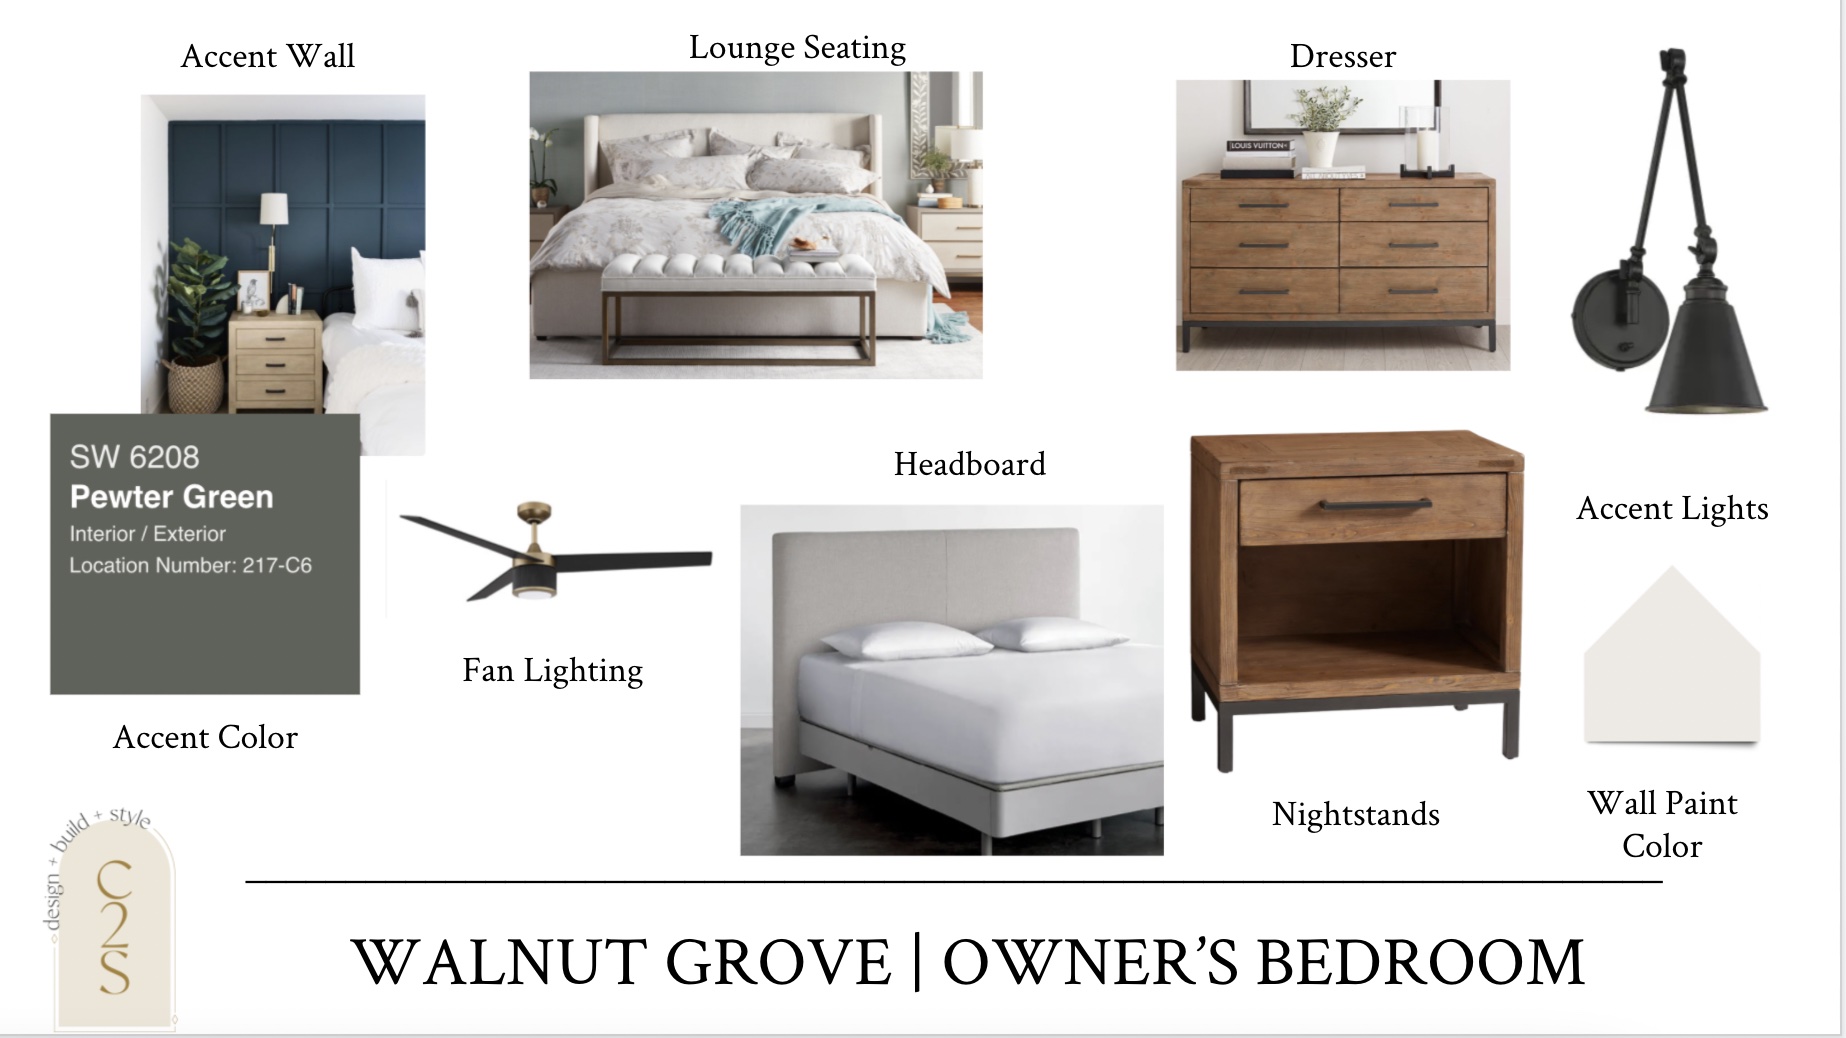 Walnut Grove Home | Owner's Bedroom - Designs